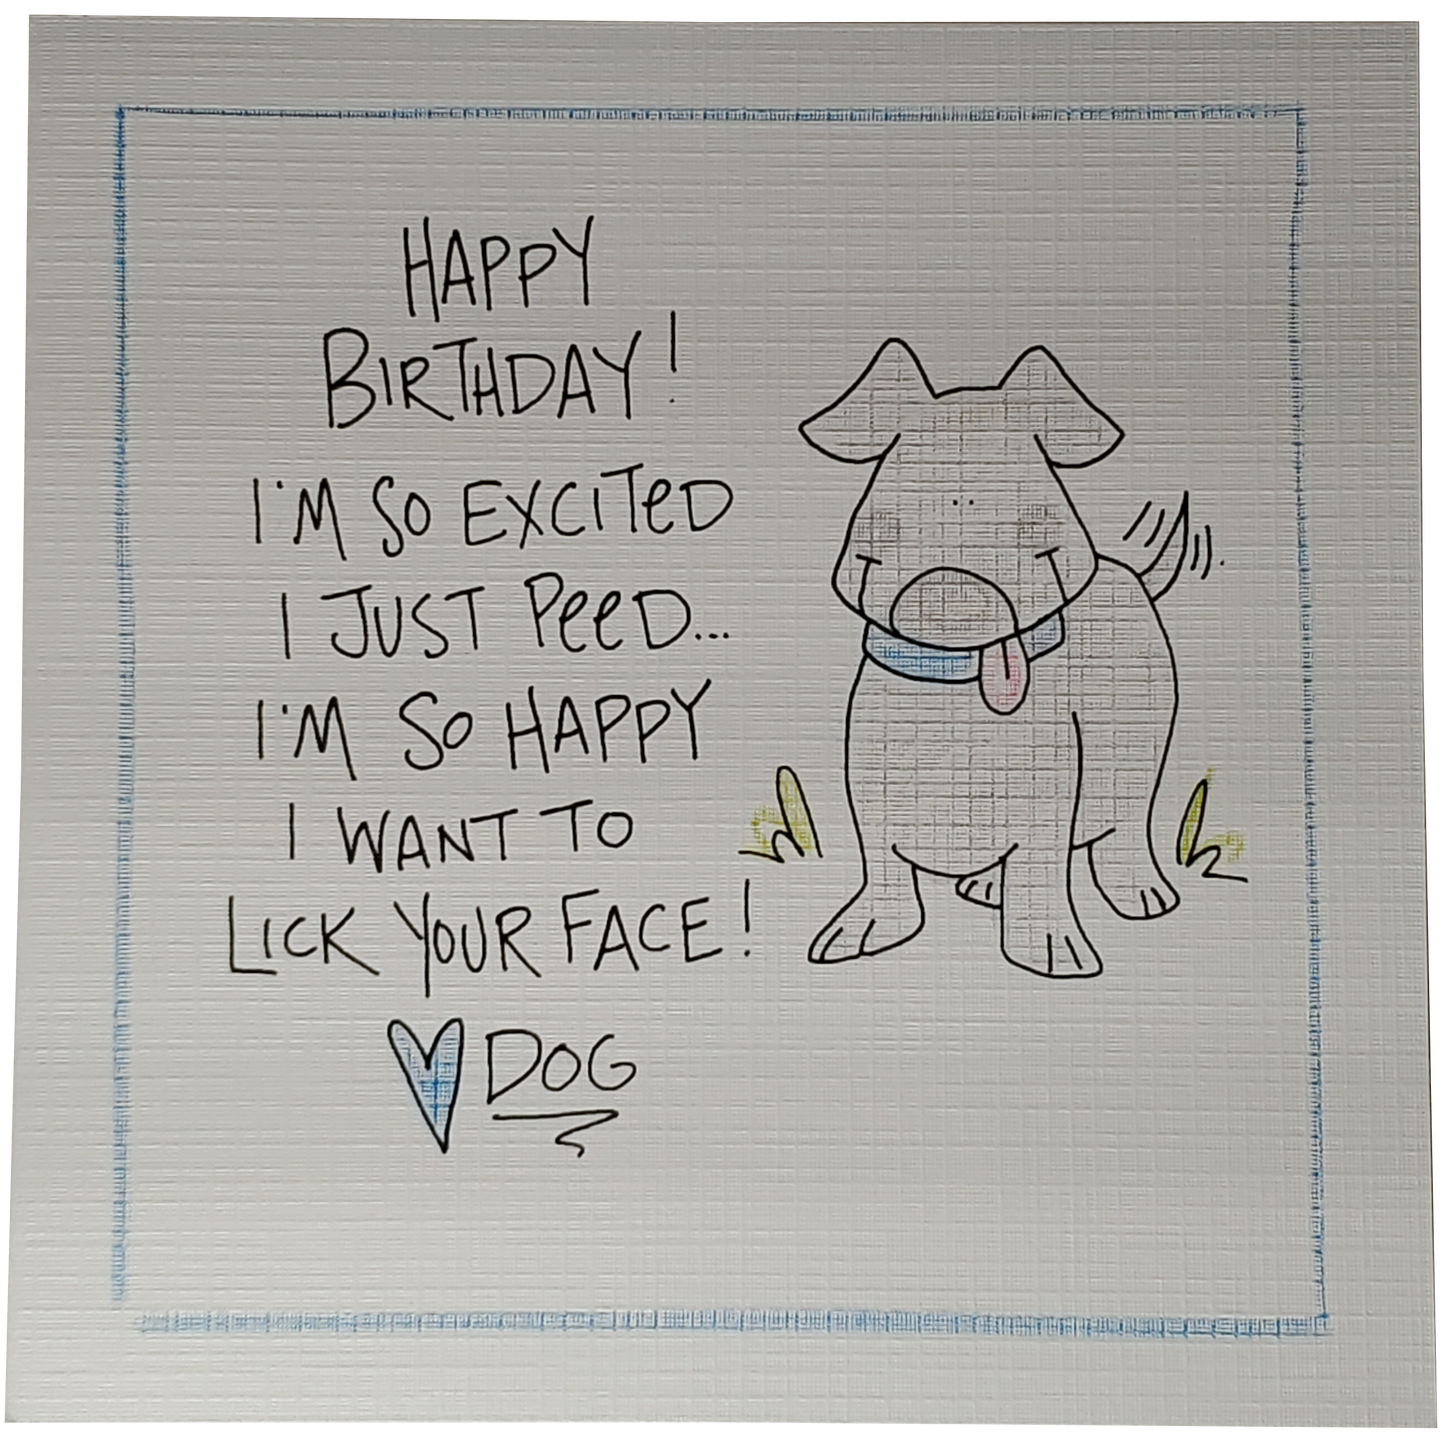 Dog-themed greeting card - Happy Birthday From Dog